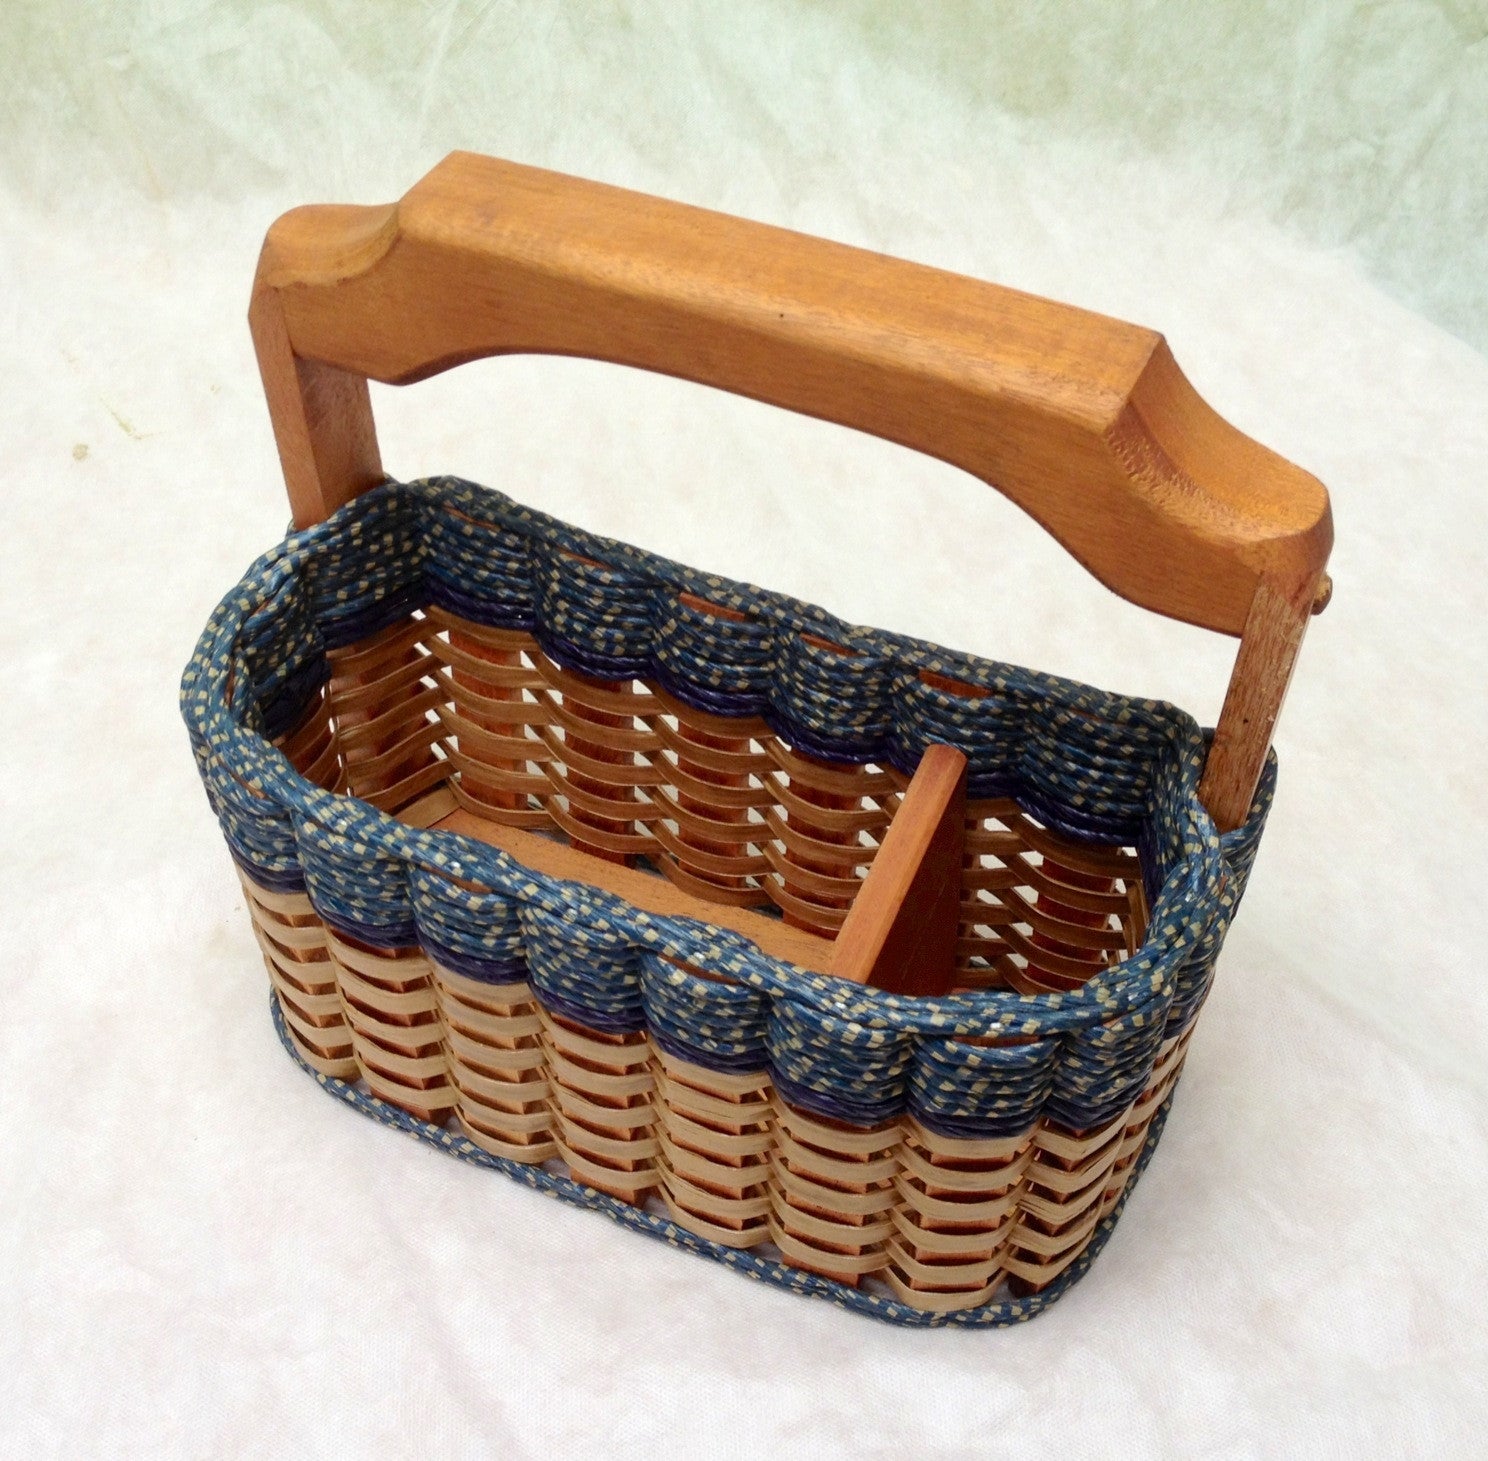 Hair Dryer Wall Basket